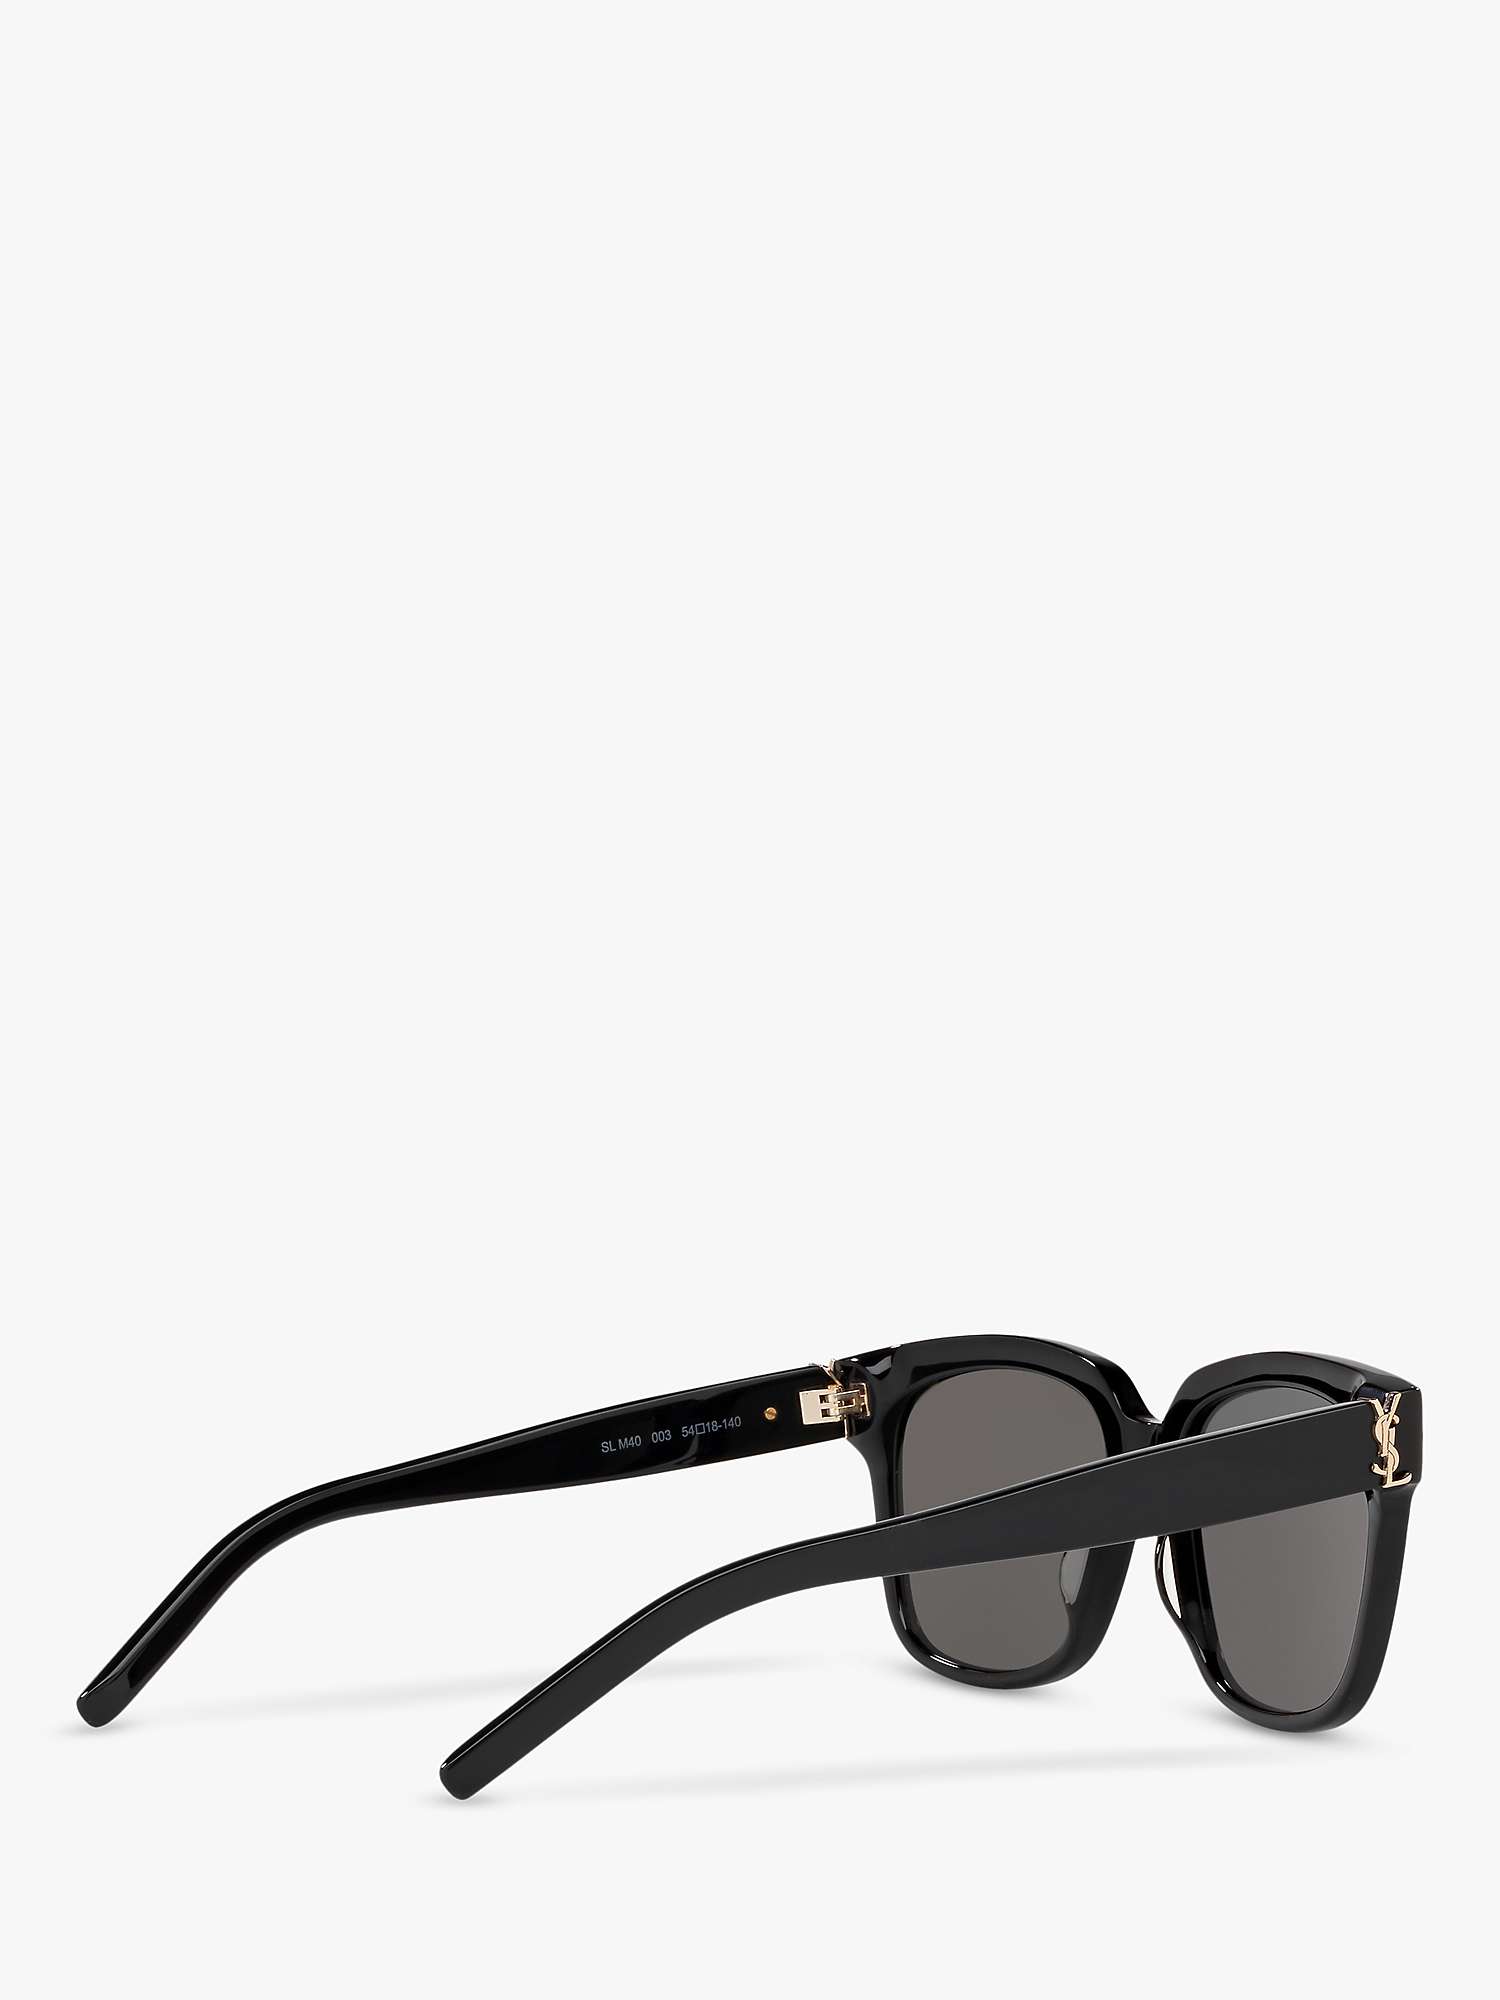 Buy Yves Saint Laurent SL M40 Women's Square Sunglasses, Black/Grey Online at johnlewis.com